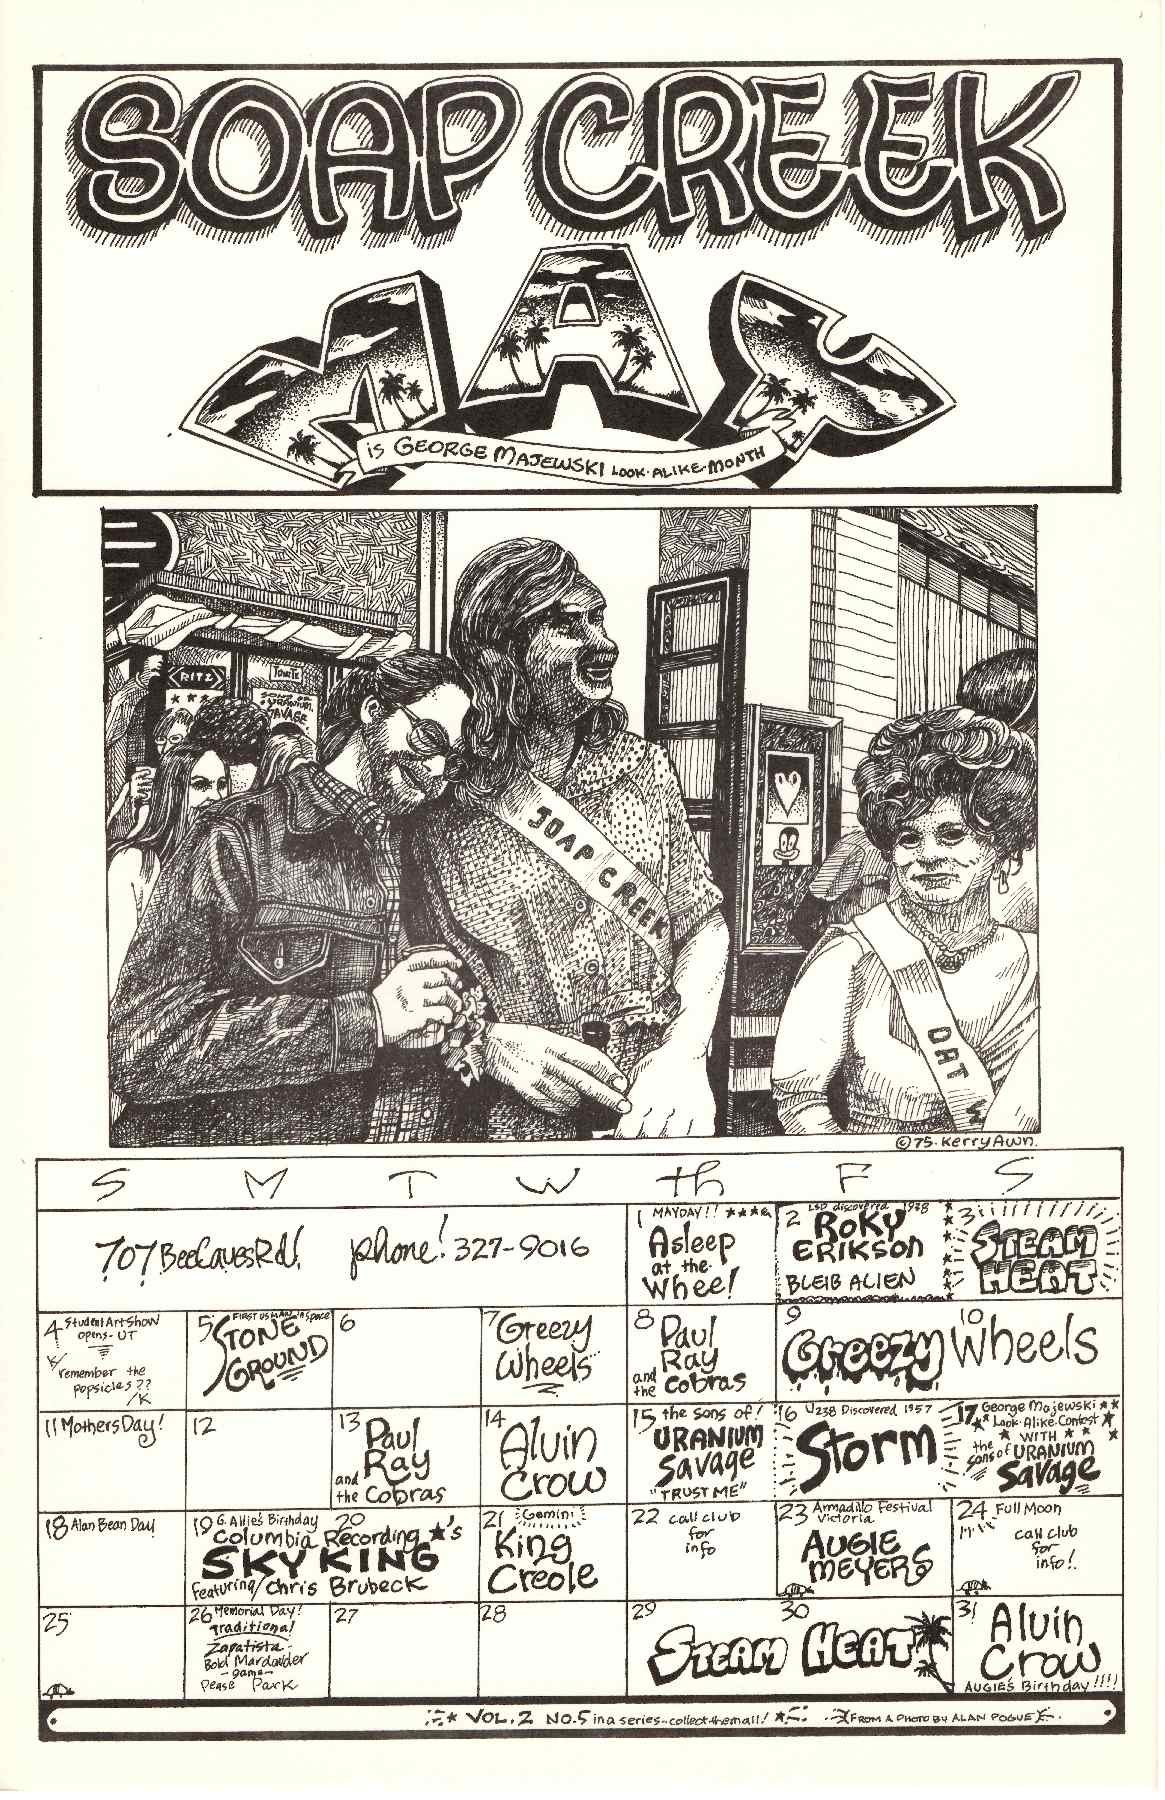 1975.05.May calendar.Soap Creek Saloon.Awn.JPG